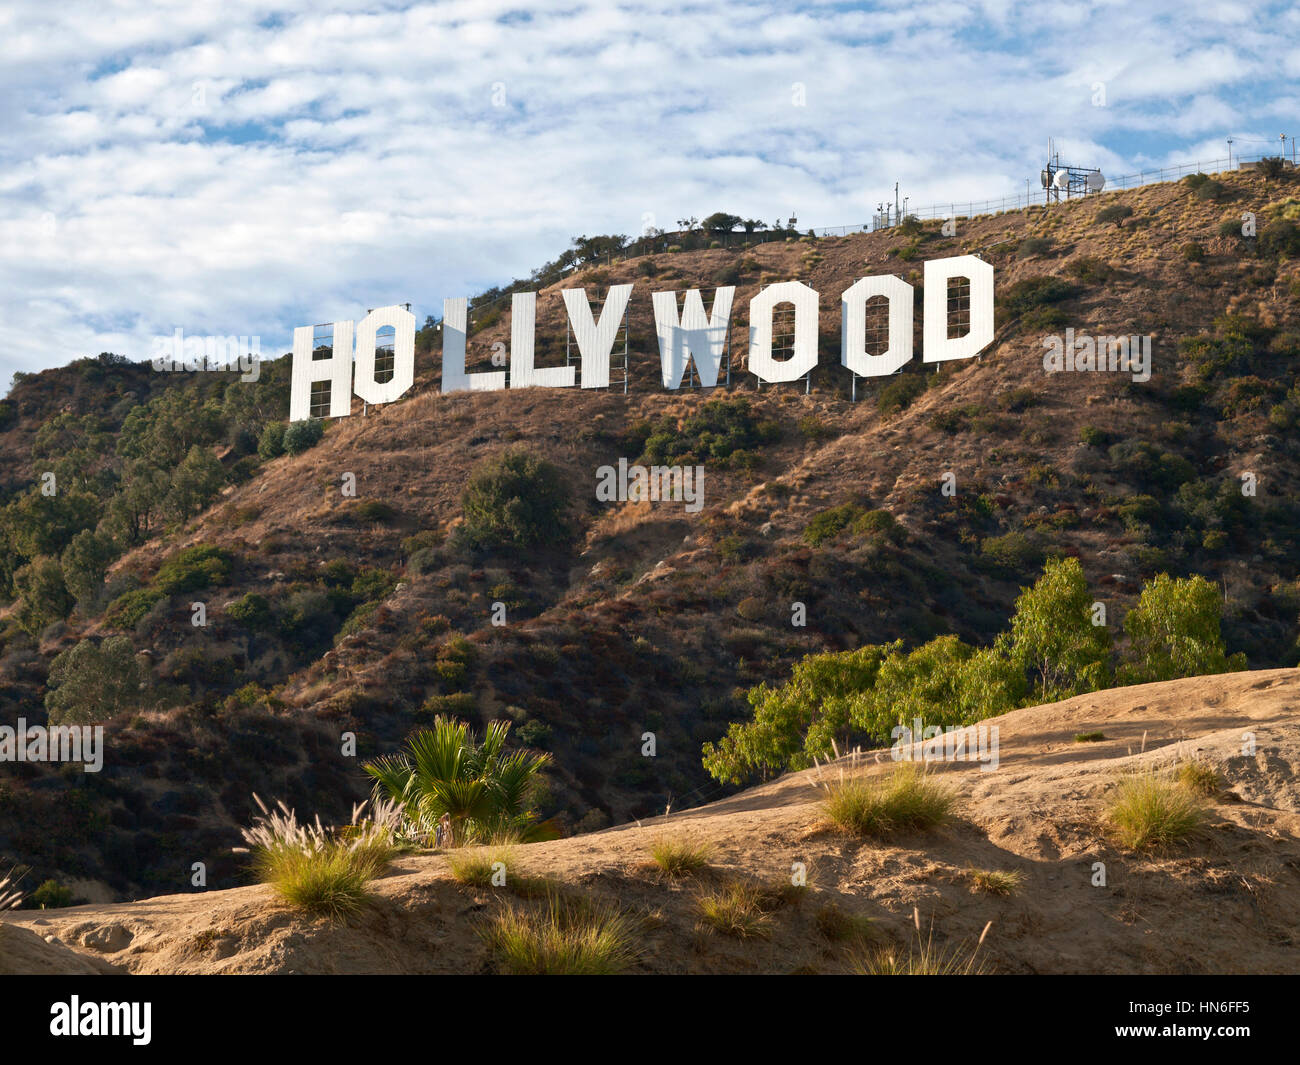 Hollywood, Kalifornien, USA - 29. September 2010: Die Welt berühmtes Wahrzeichen Hollywood Sign in LA Griffith Park. Stockfoto